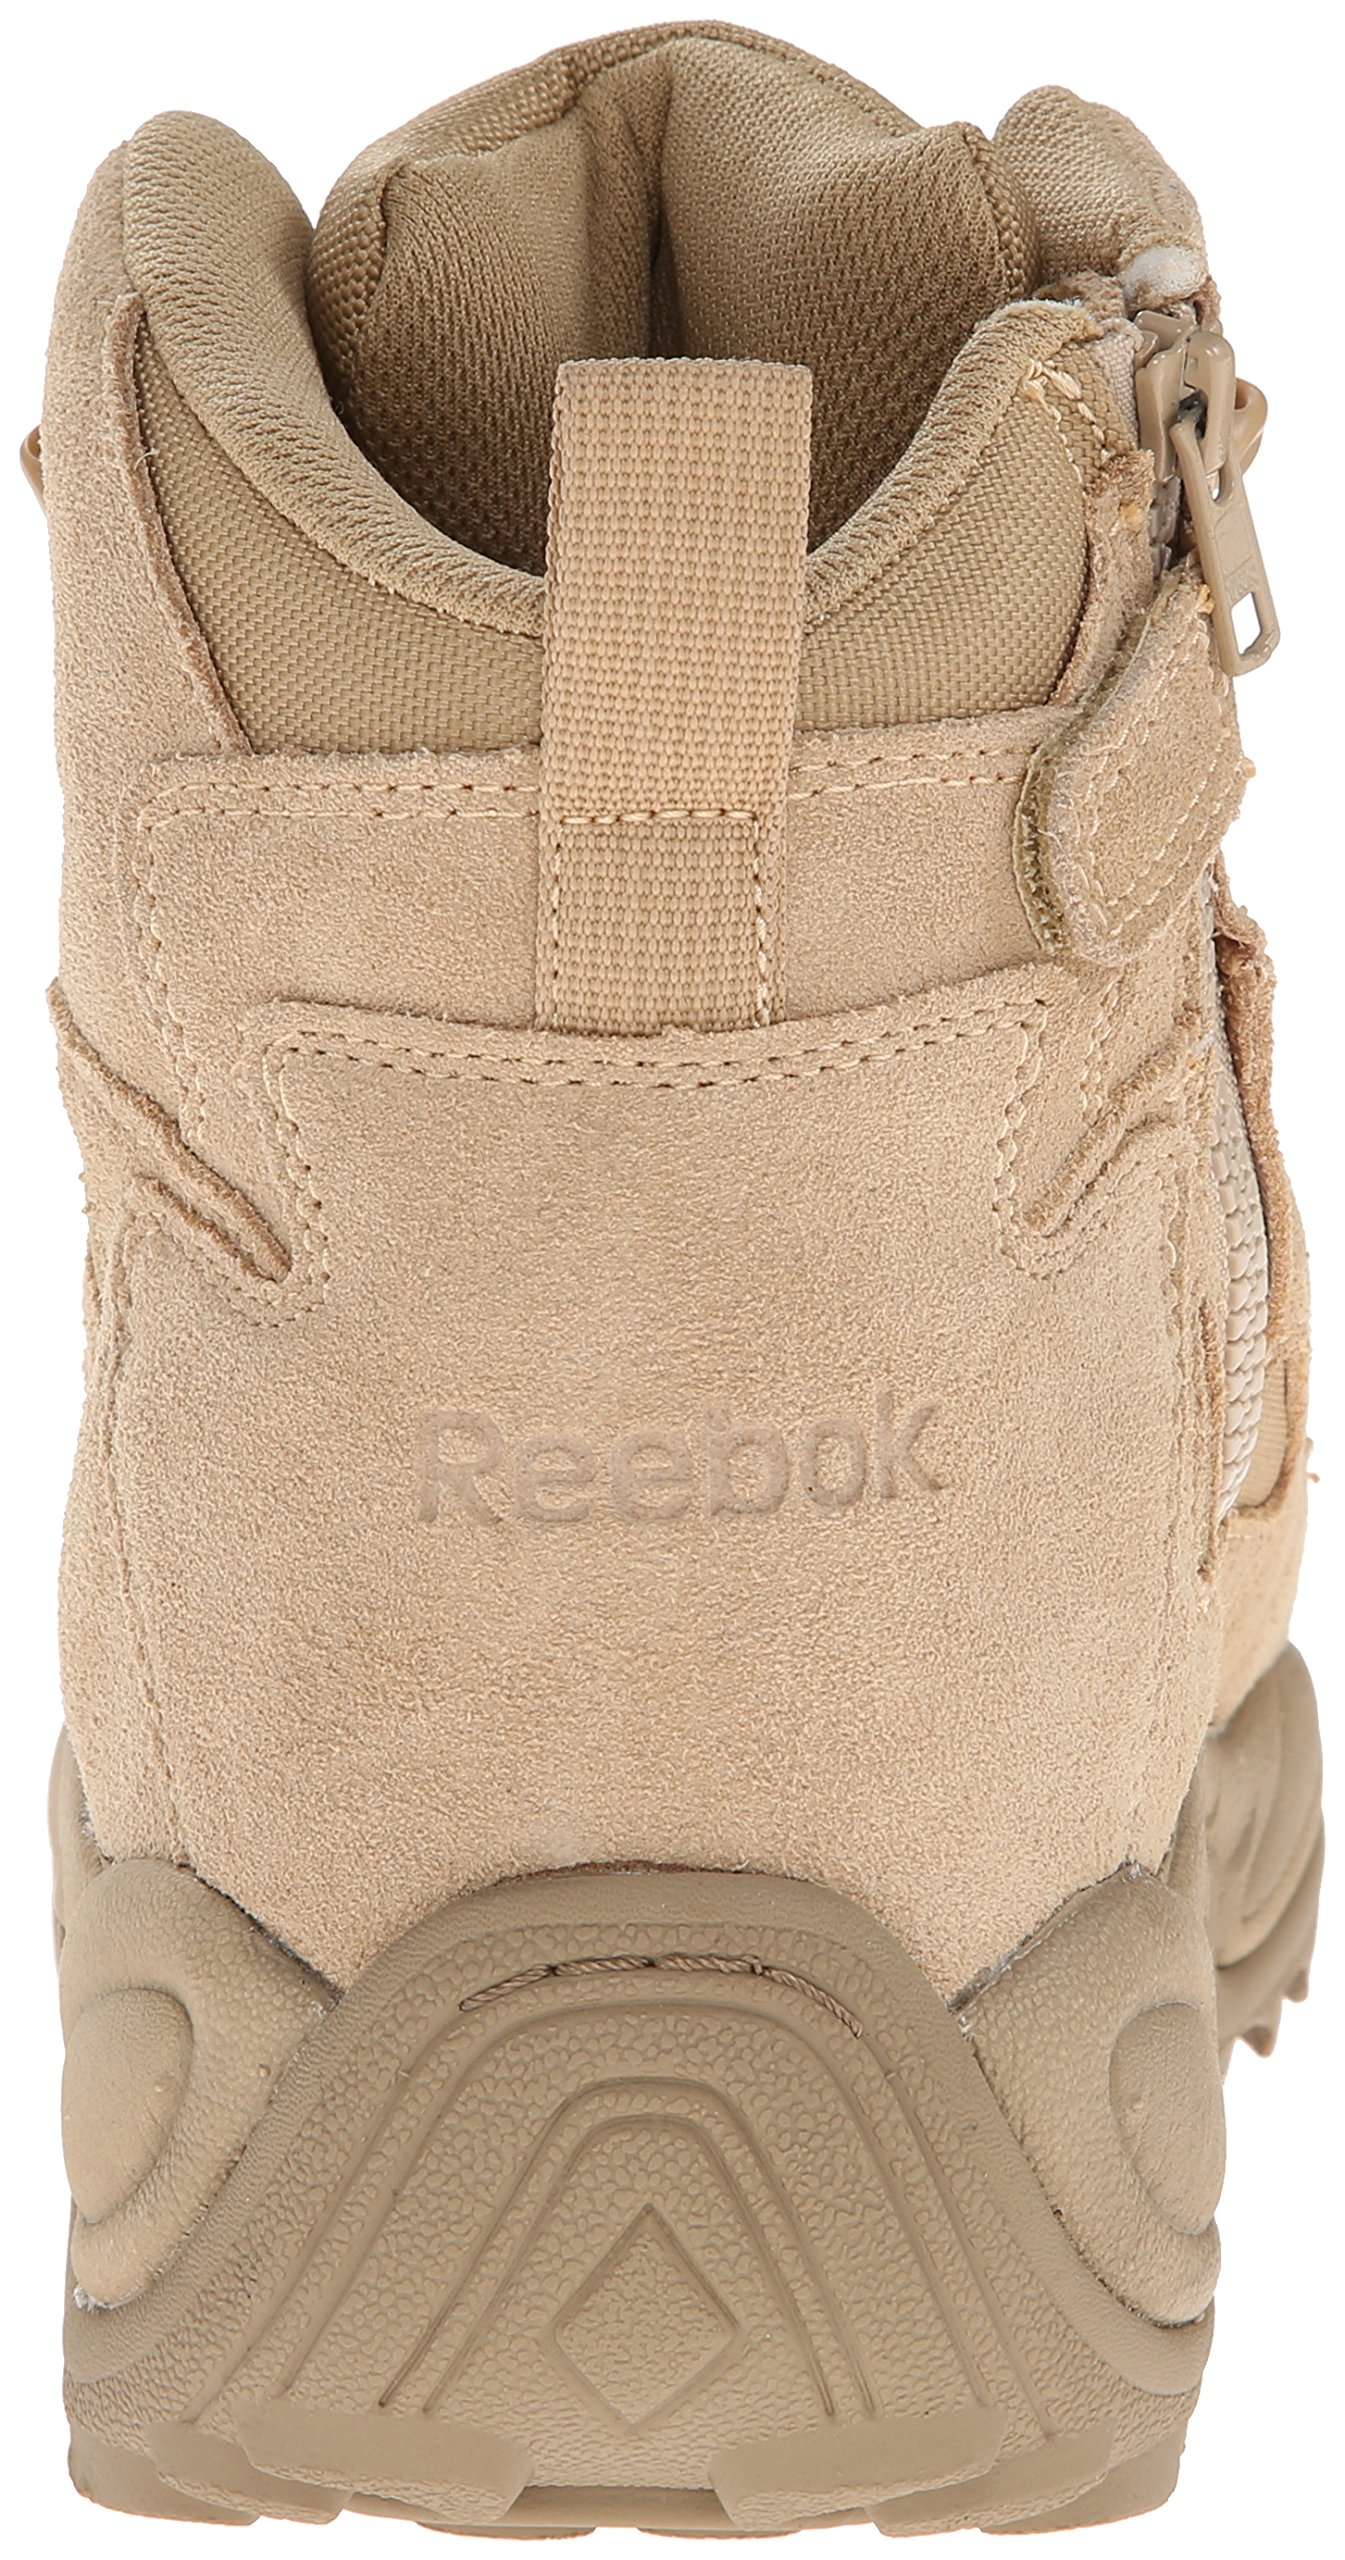 Reebok Work Men's Rapid Response RB8678 Safety Boot,Black